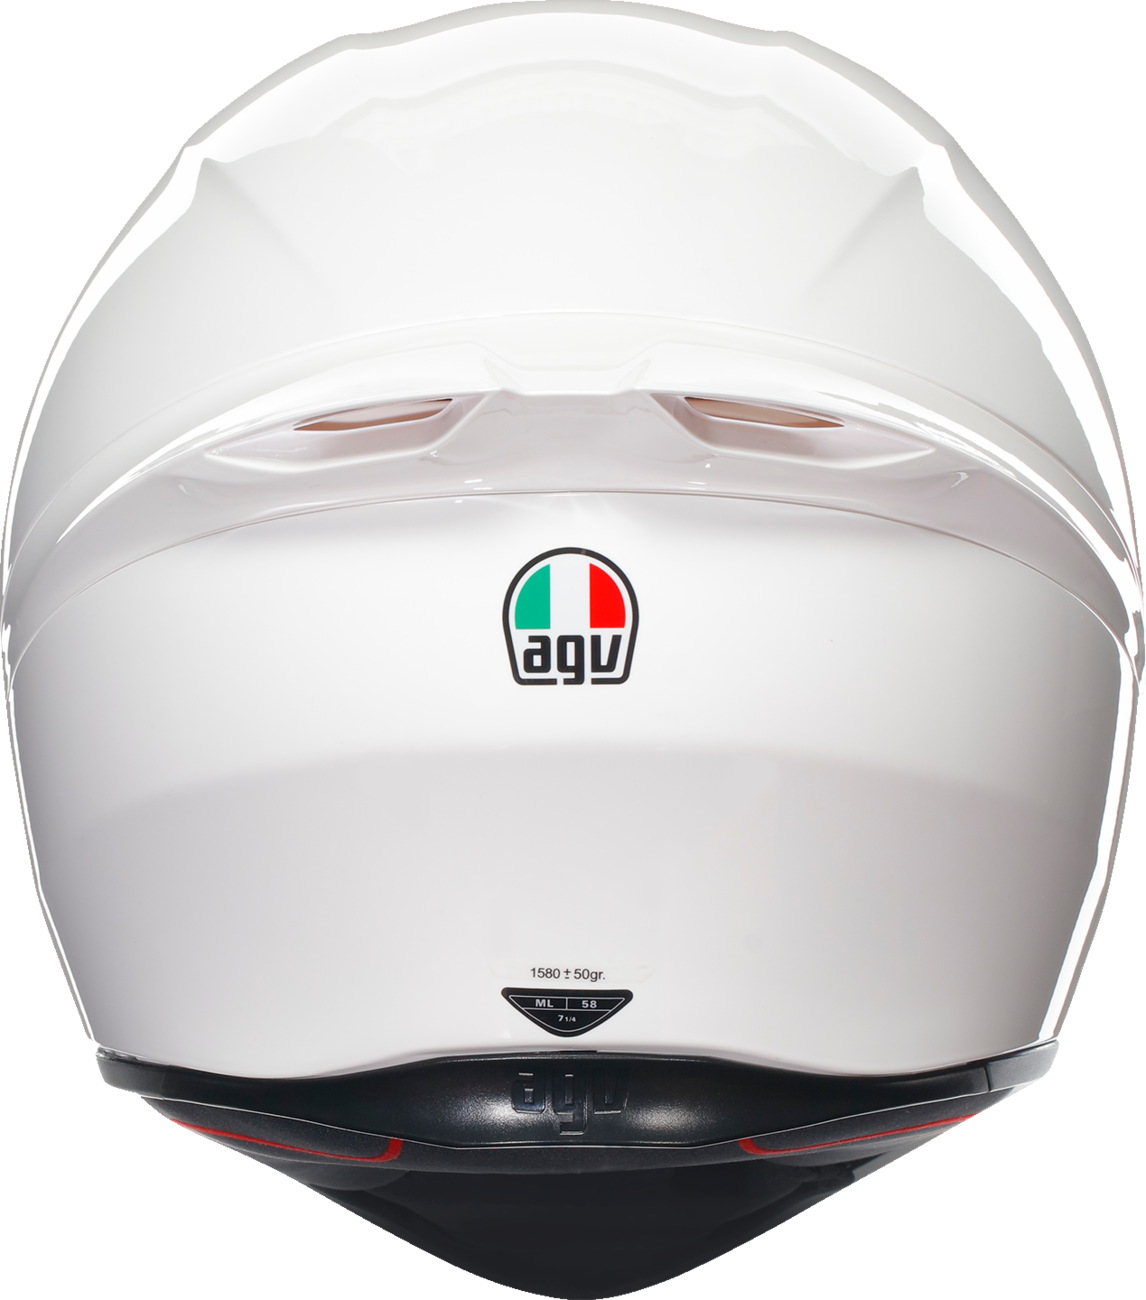 AGV K1 S Helmet - White - XL 2118394003028XL